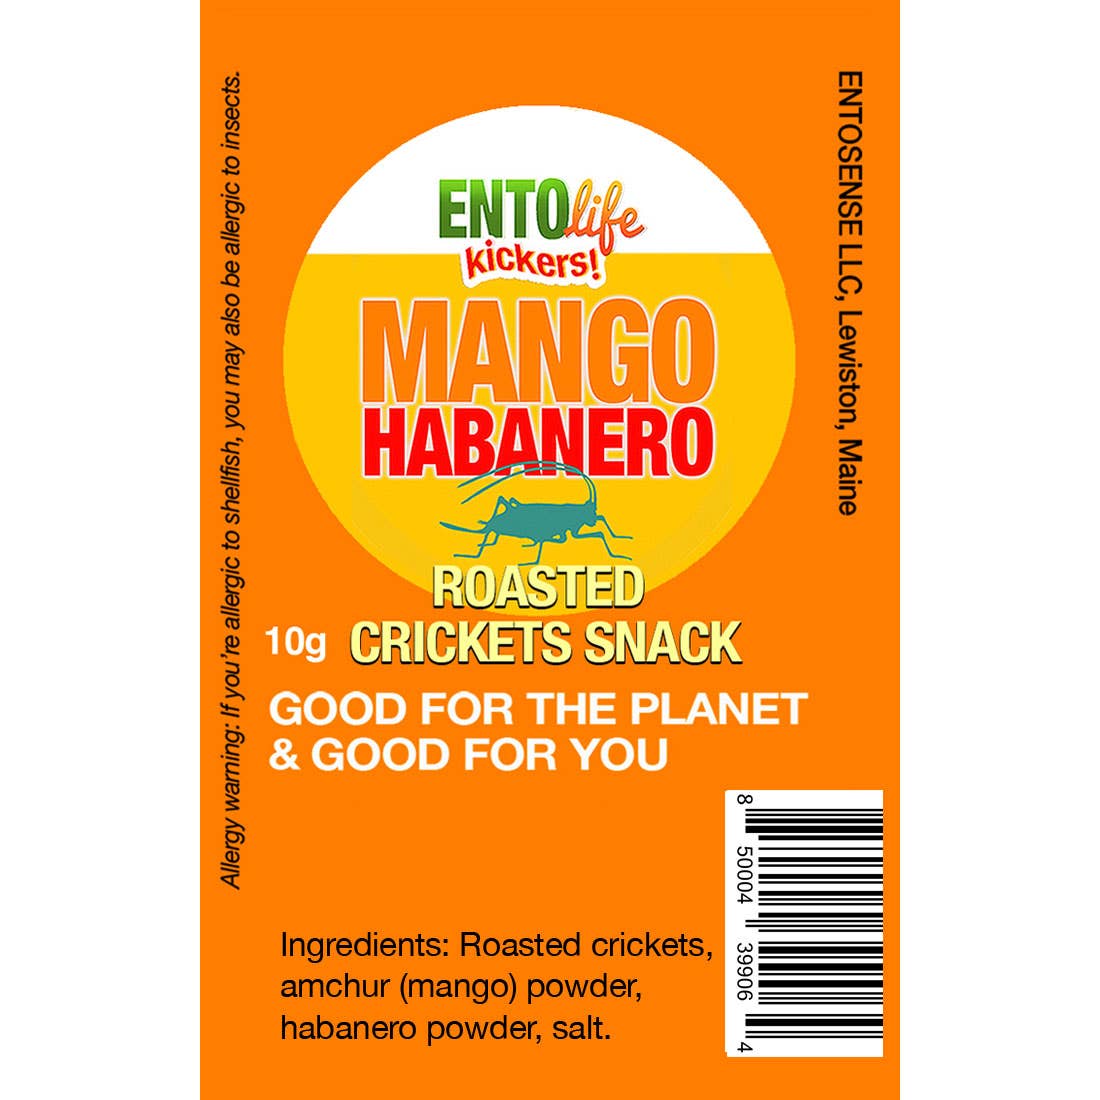 EntoLife Edible Insects - Crickets! - Mini-Kickers Flavored Cricket Snacks - Mango Habanero